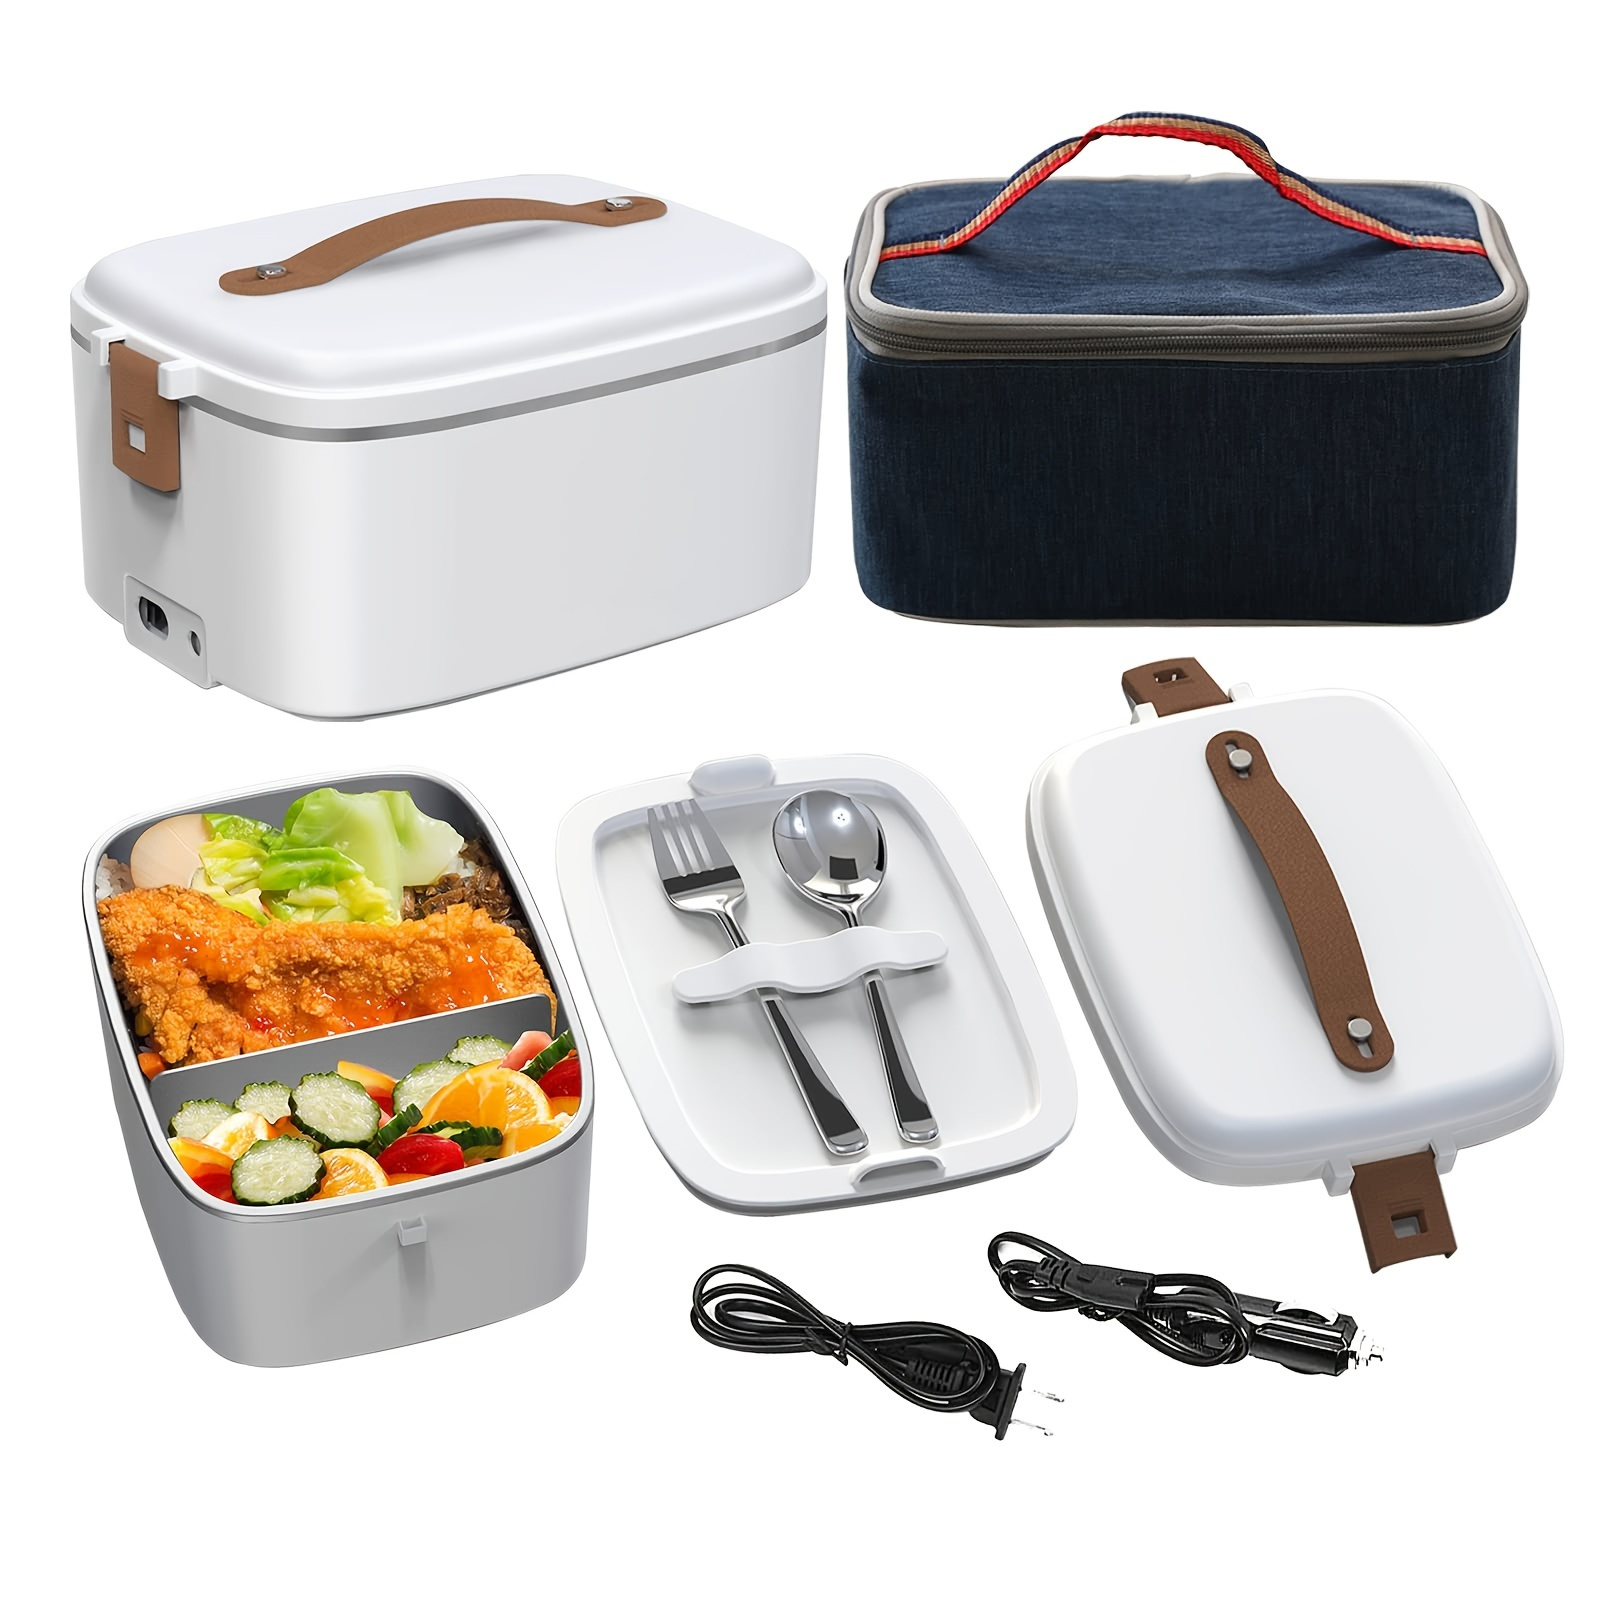 Samll - Lonchera portátil, horno portátil con calefacción alimentado por  USB, calentador de alimentos eléctrico para oficina, viajes, comidas